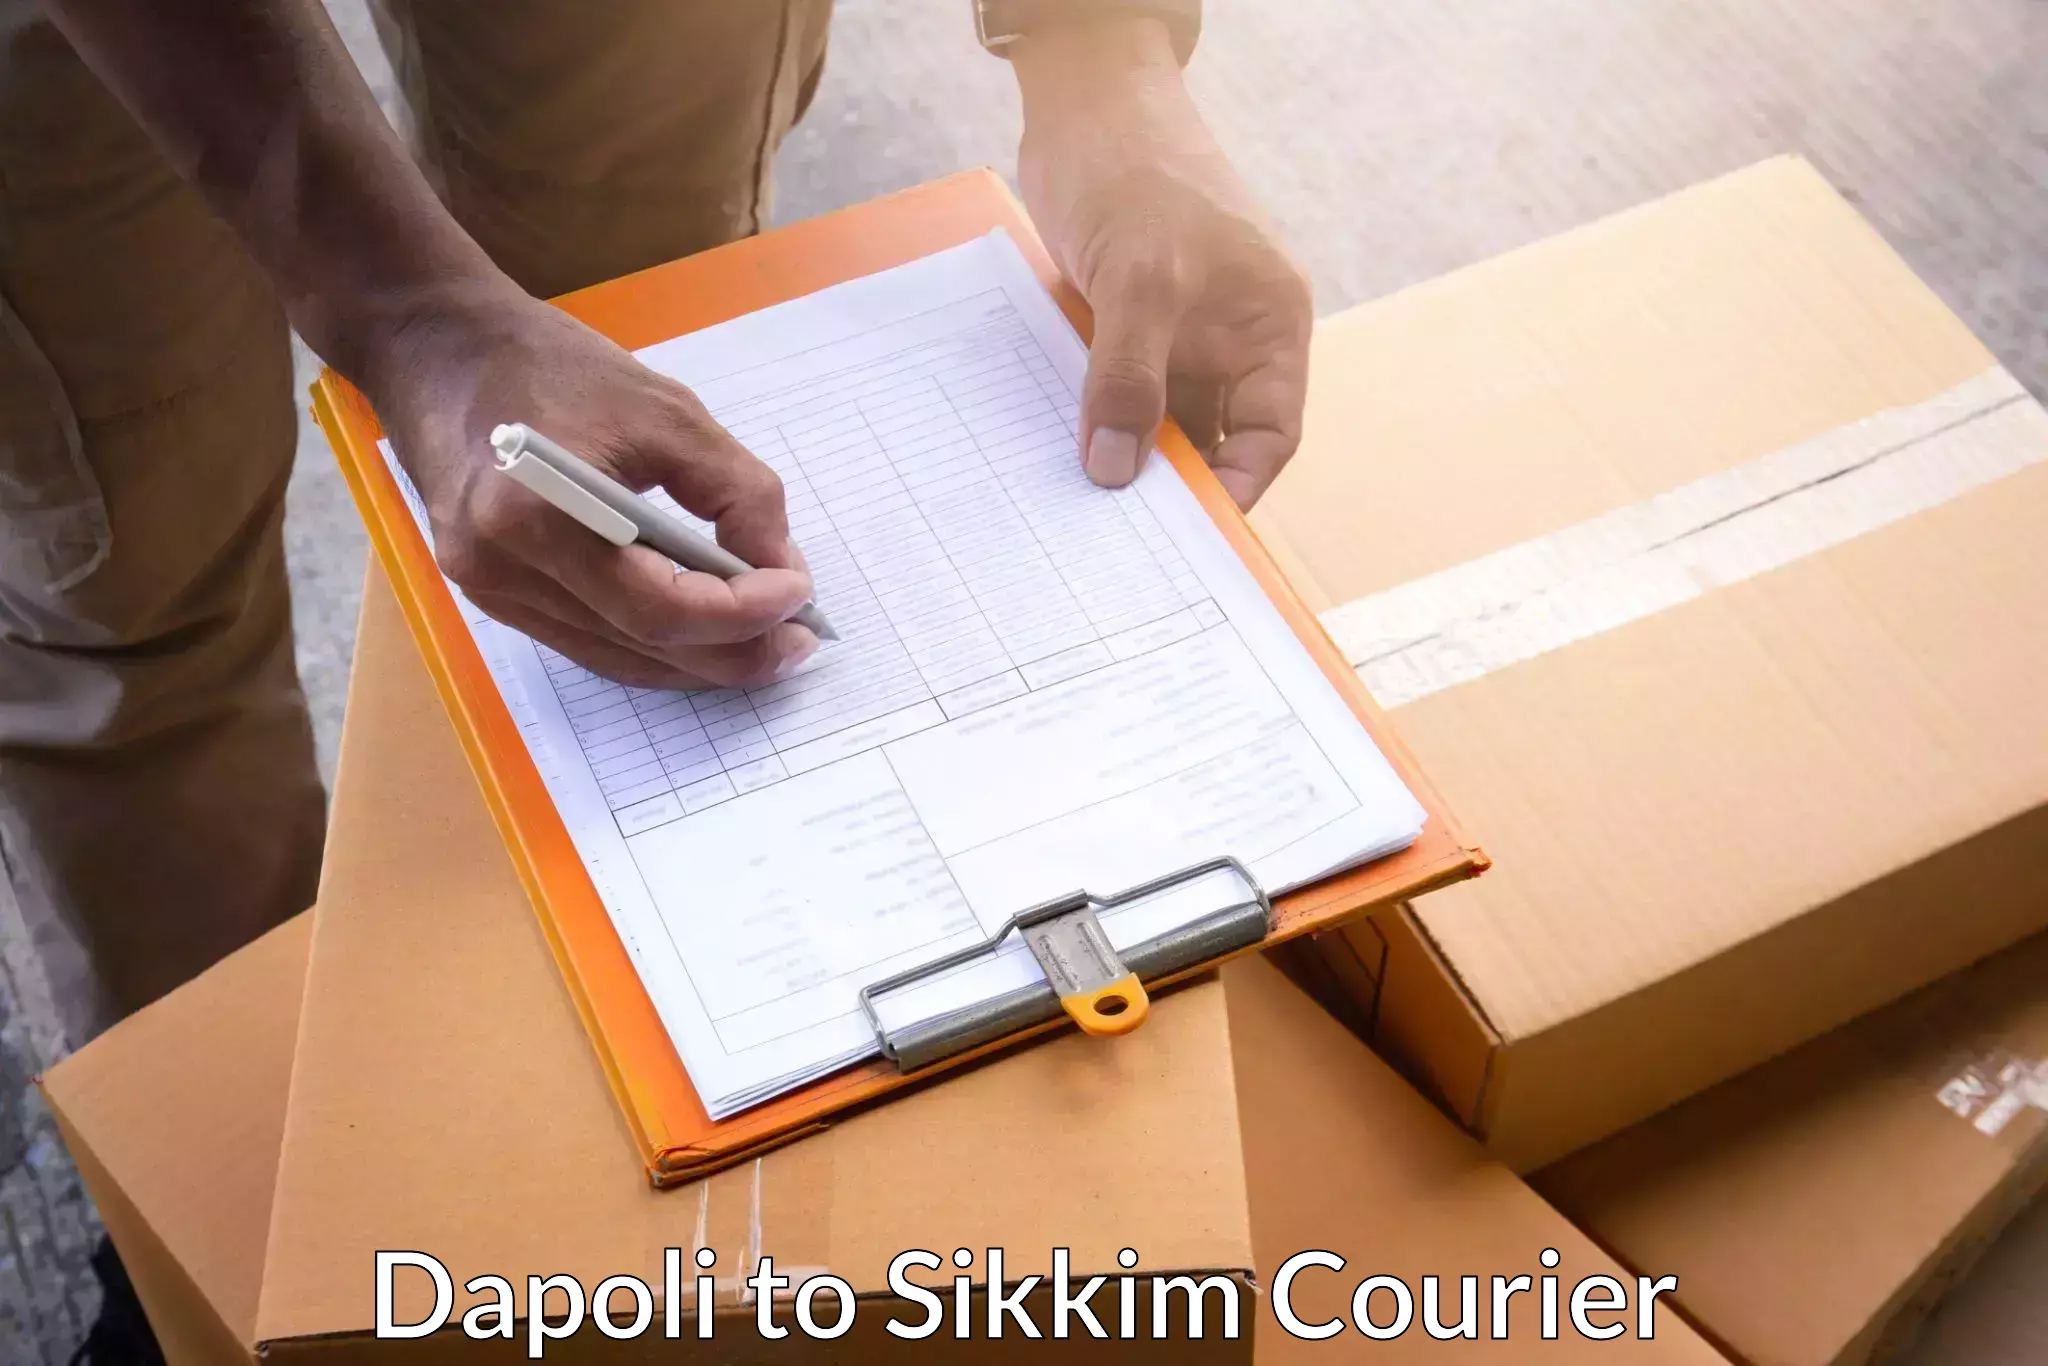 Bulk shipping discounts Dapoli to Gangtok